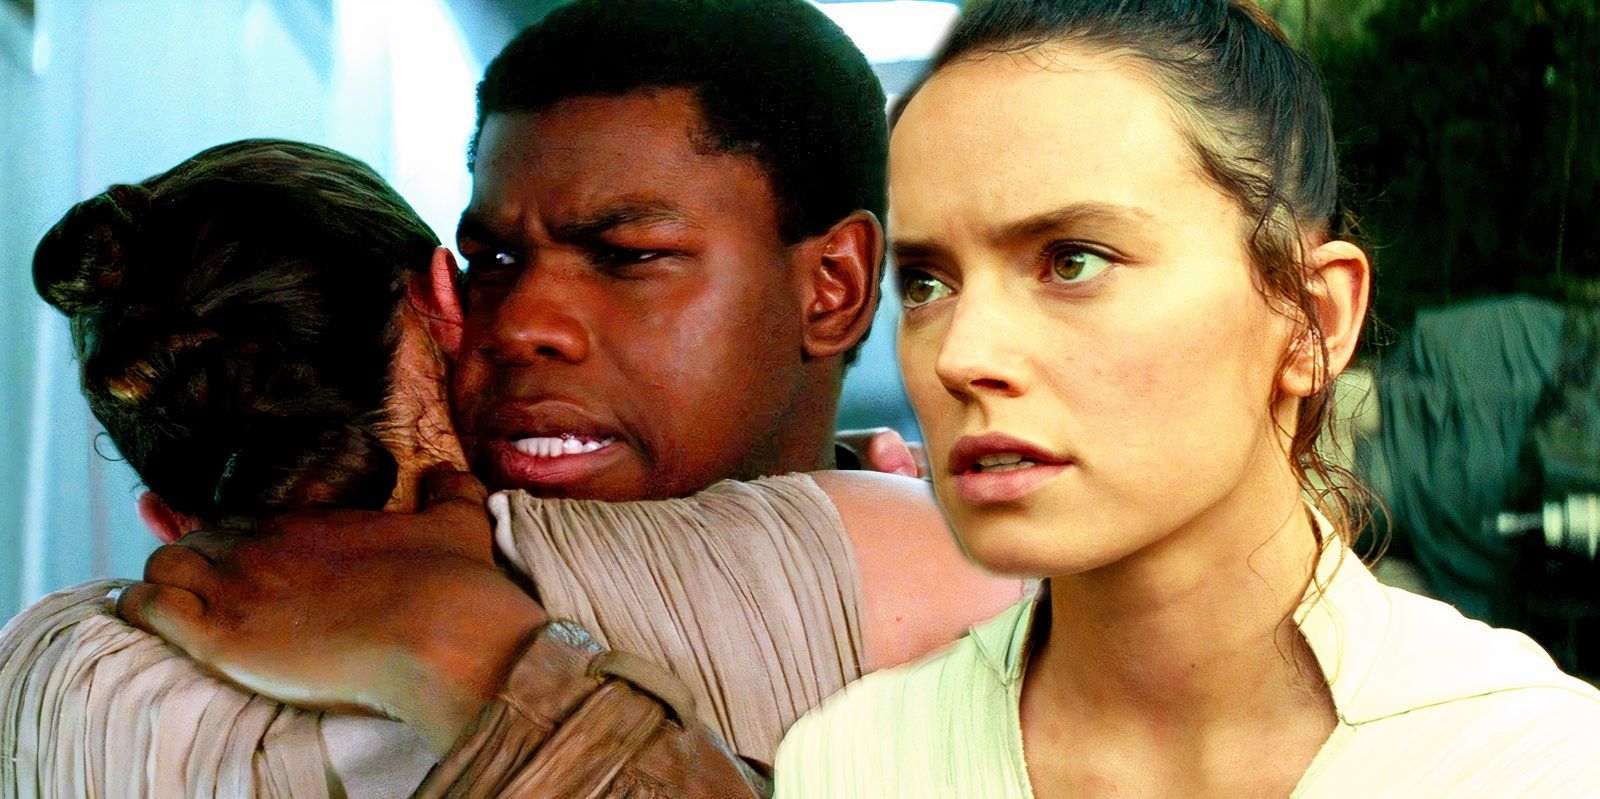 Finn hugging Rey as Rey looks on in Star Wars Rise of Skywalker